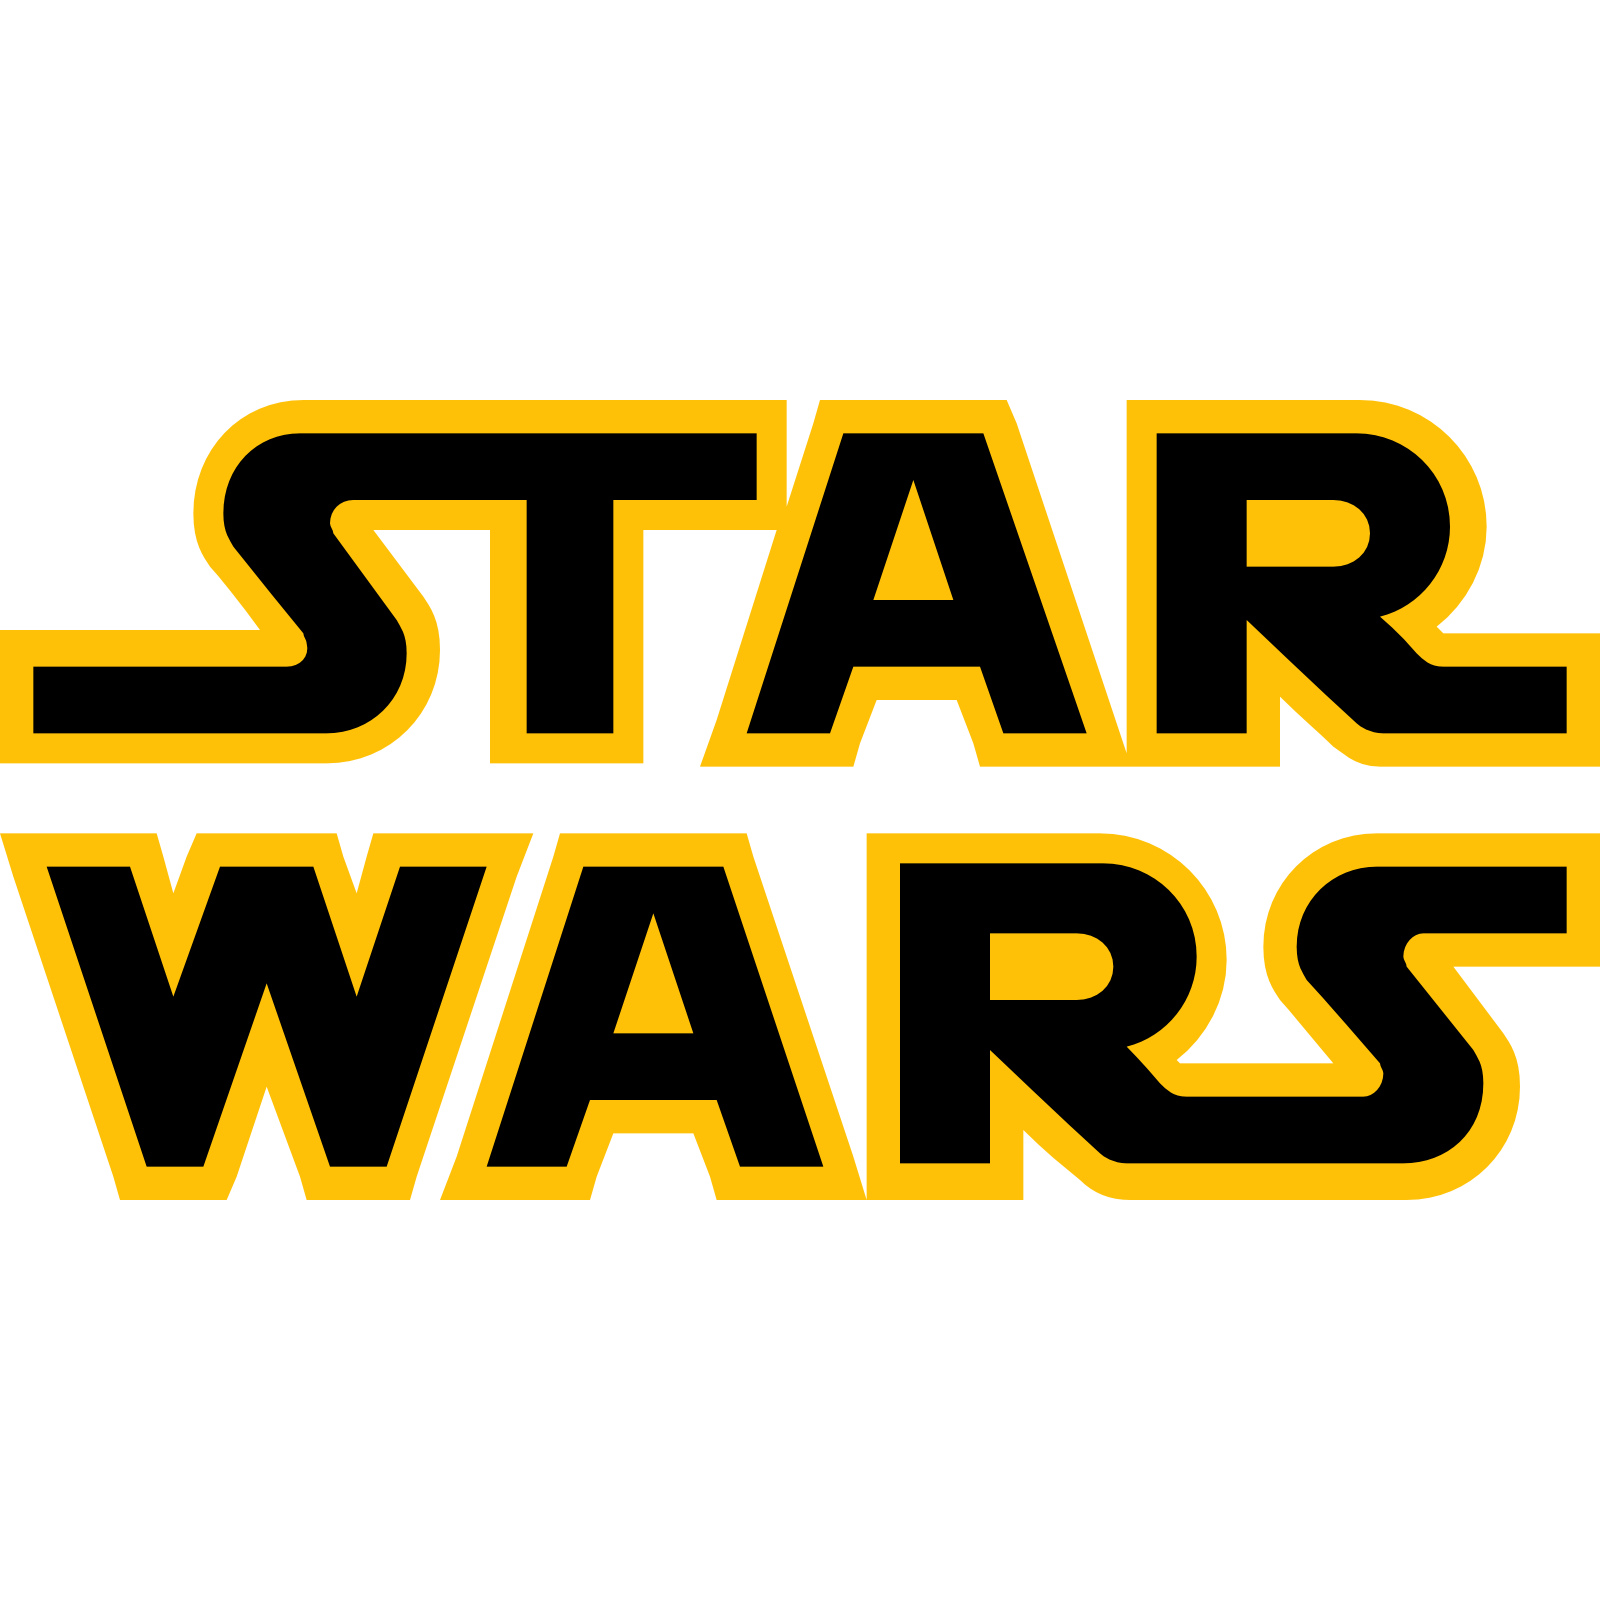 Star Wars Movie Logos & Font Download Logos! Lists! Brands!